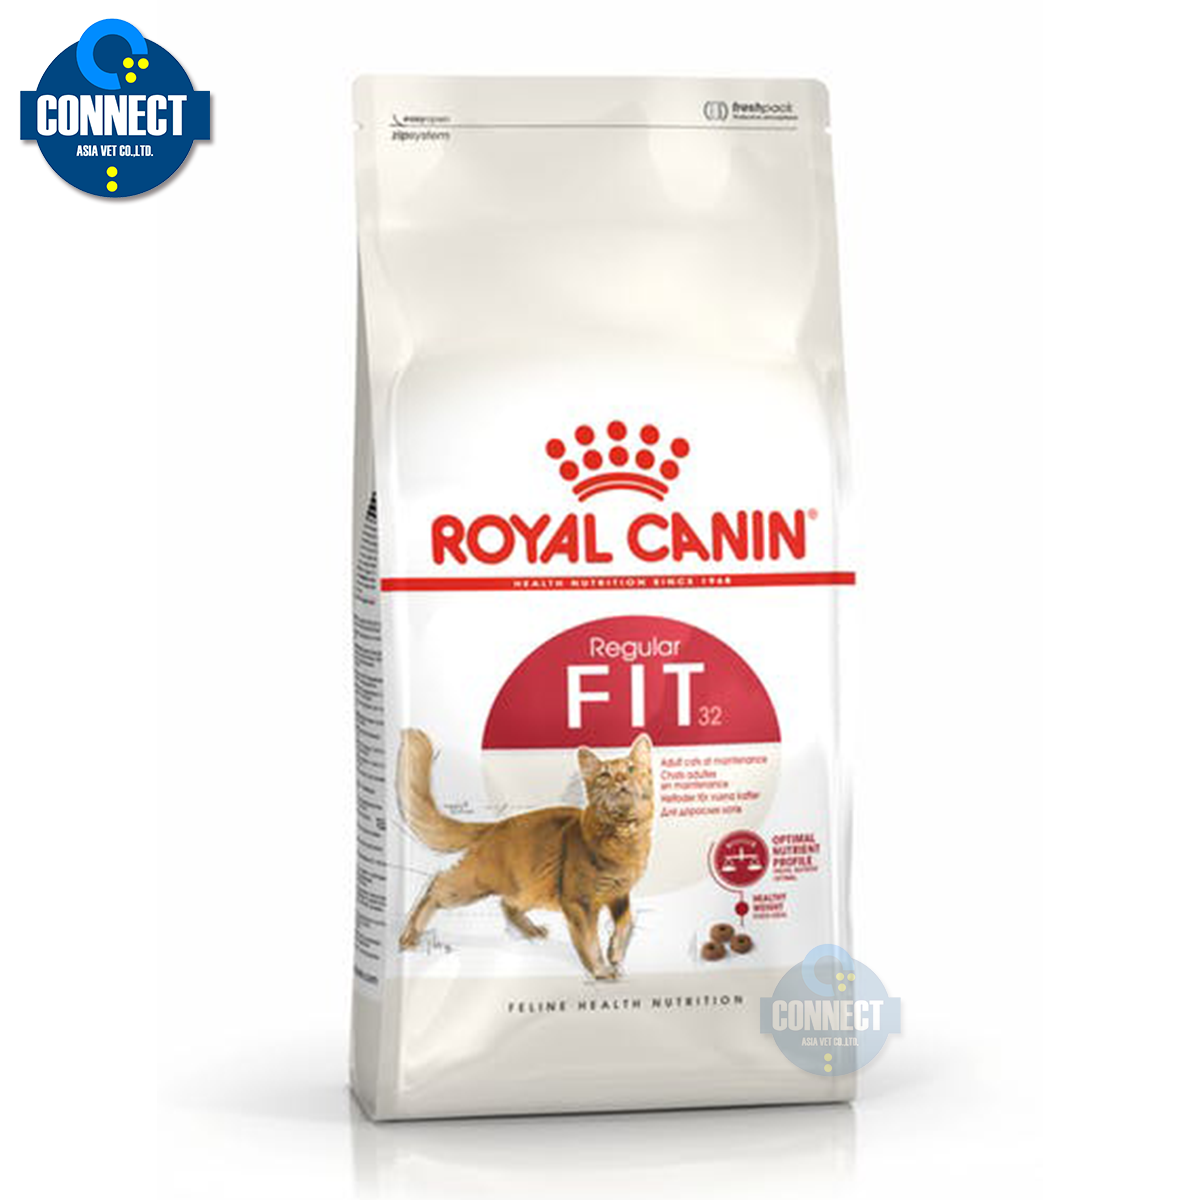 Royal Canin Fit ขนาดถุง ( 400 กรัม , 2 กิโลกรัม , 4 กิโลกรัม )